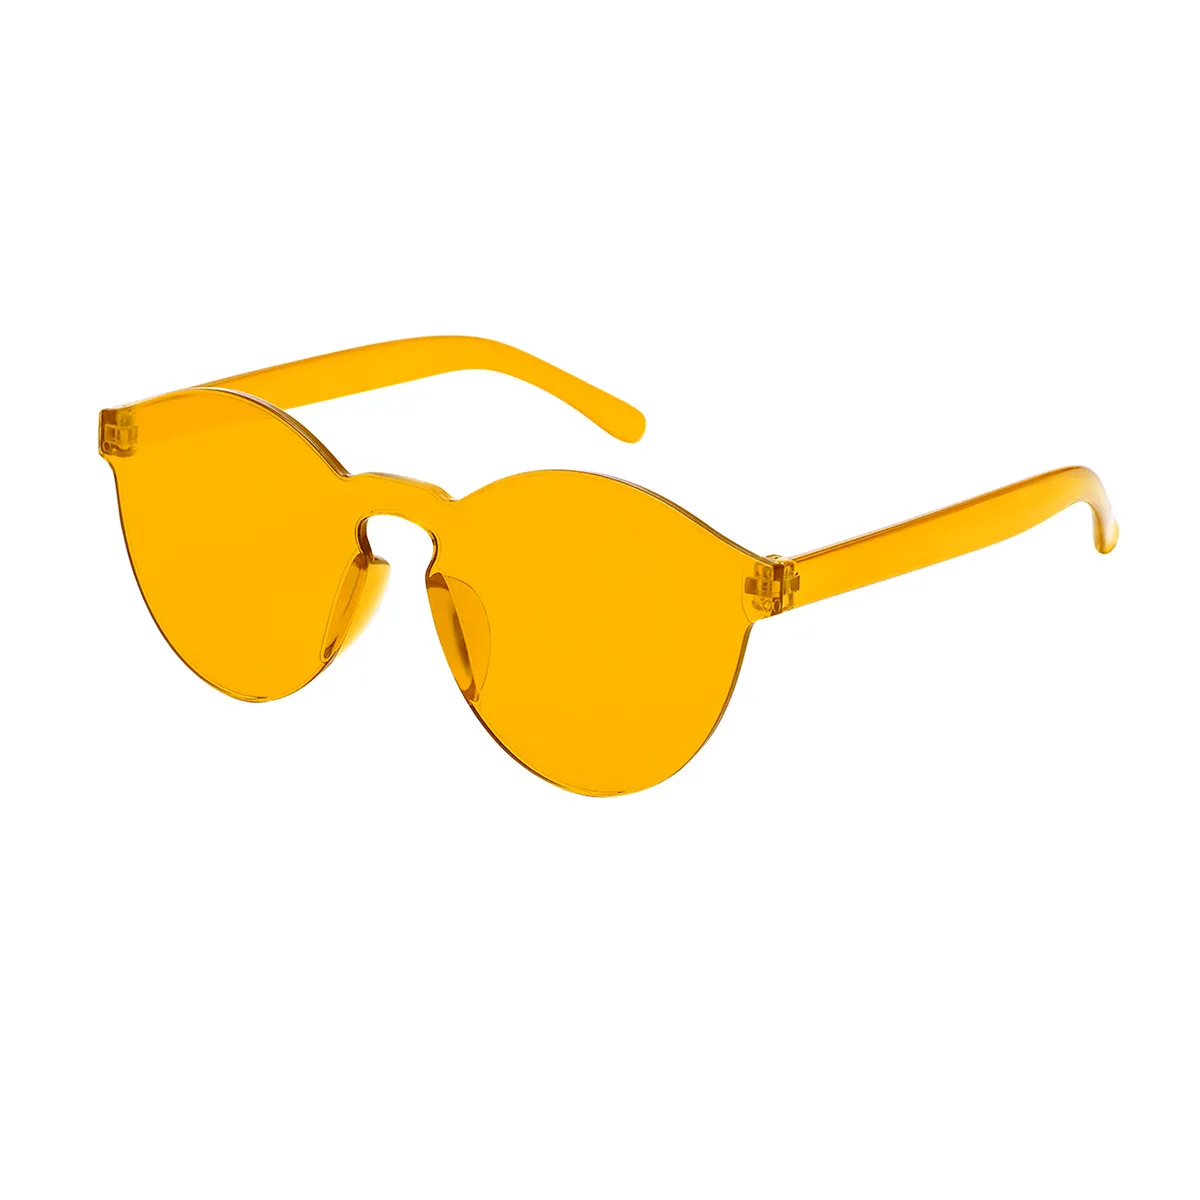 Calloway - Round Clear Orange Sunglasses for Women